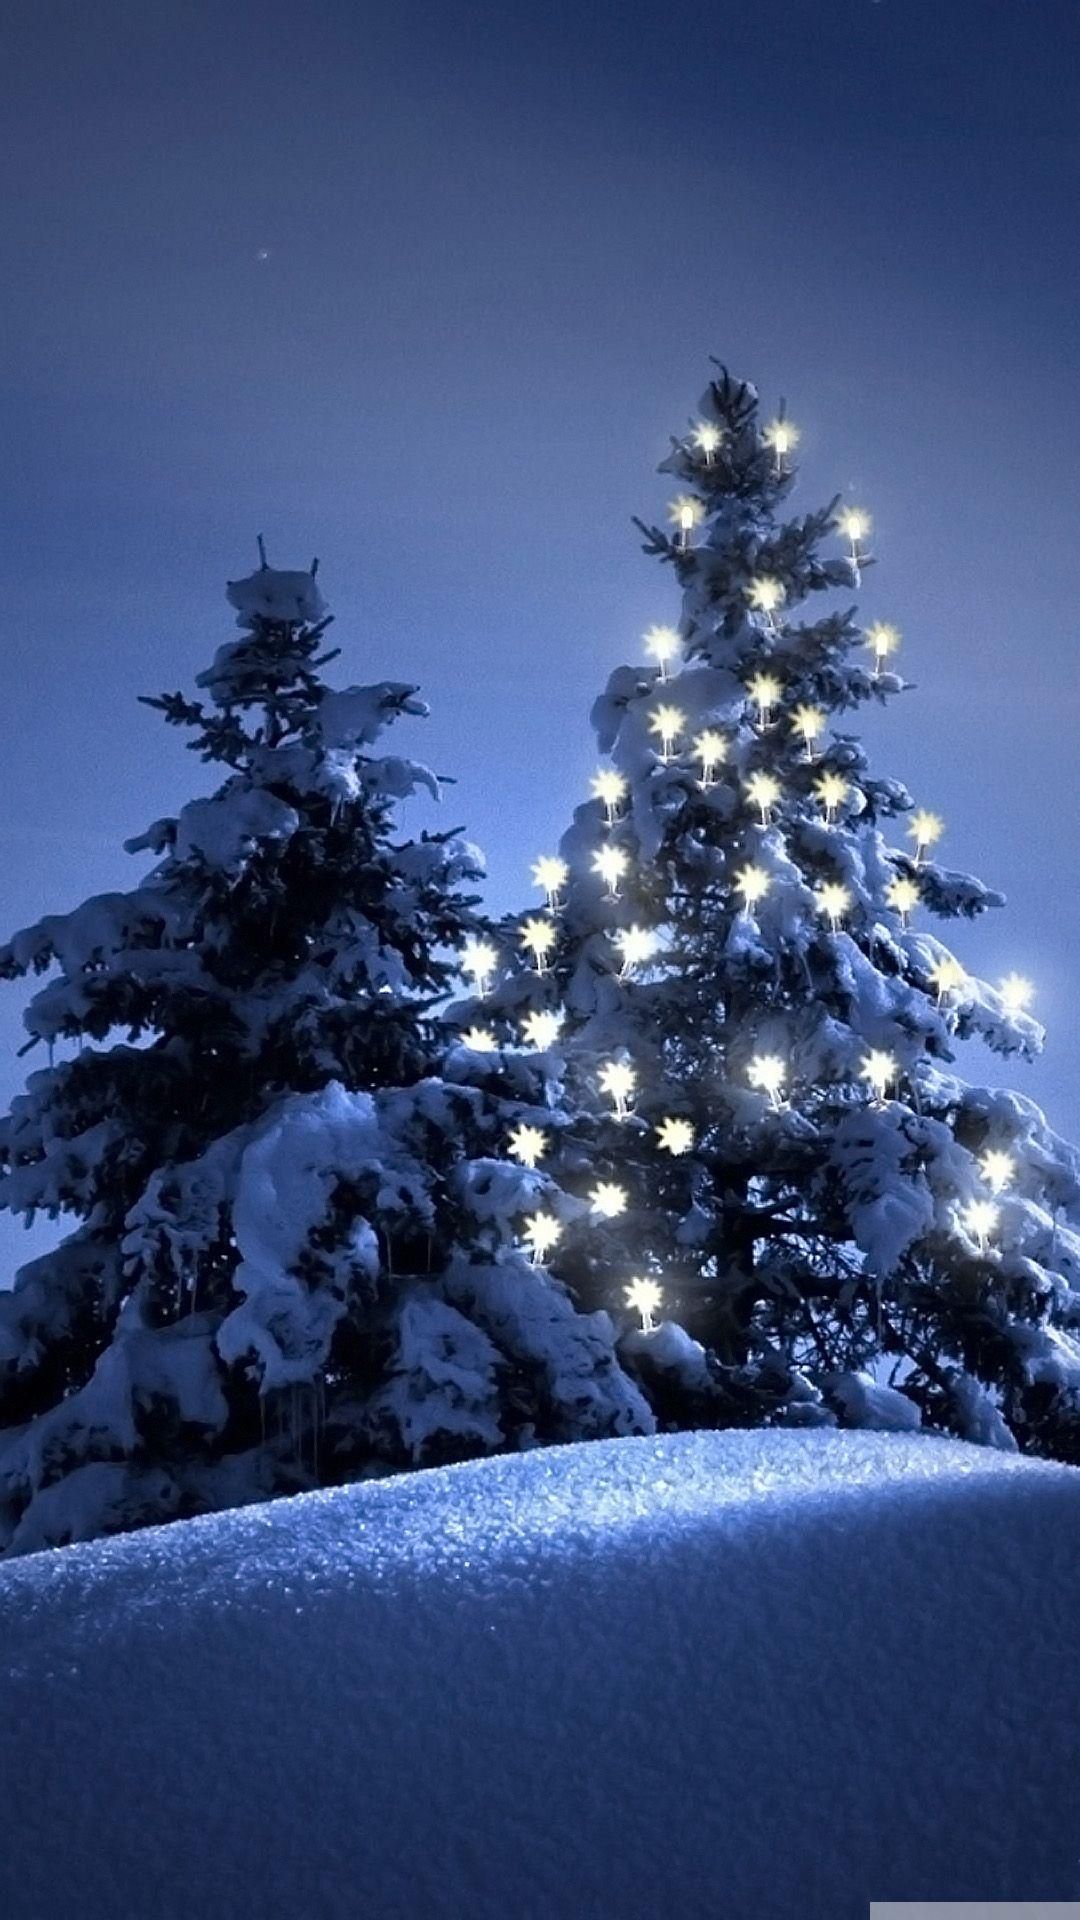 Snow Christmas Tree Winter IPhone 6 Wallpaper. Wallpaper Iphone Christmas, Christmas Tree Wallpaper Iphone, Christmas Wallpaper